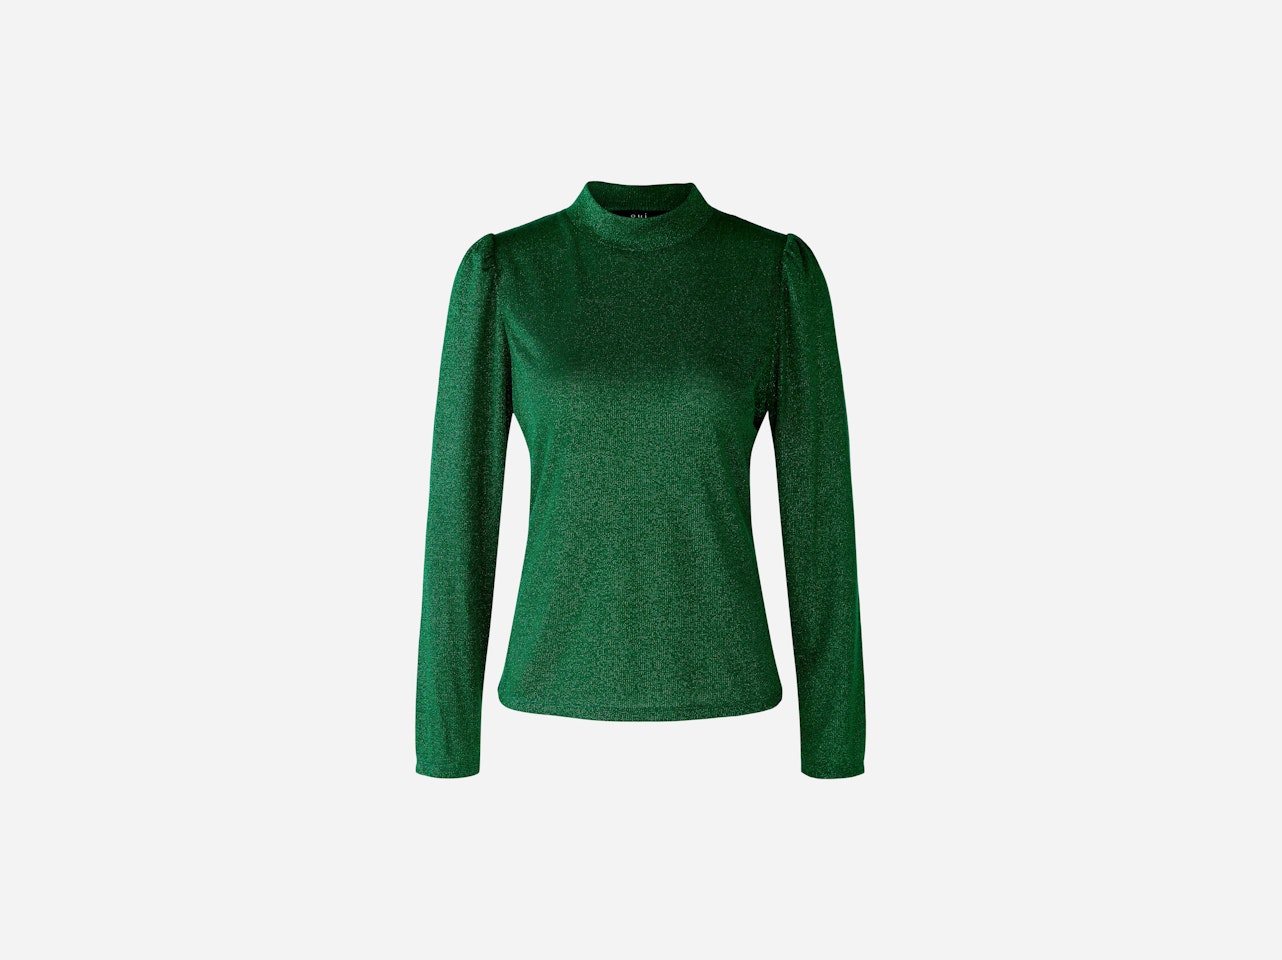 Bild 1 von Long-sleeved shirt with glittering shiny yarn in green | Oui